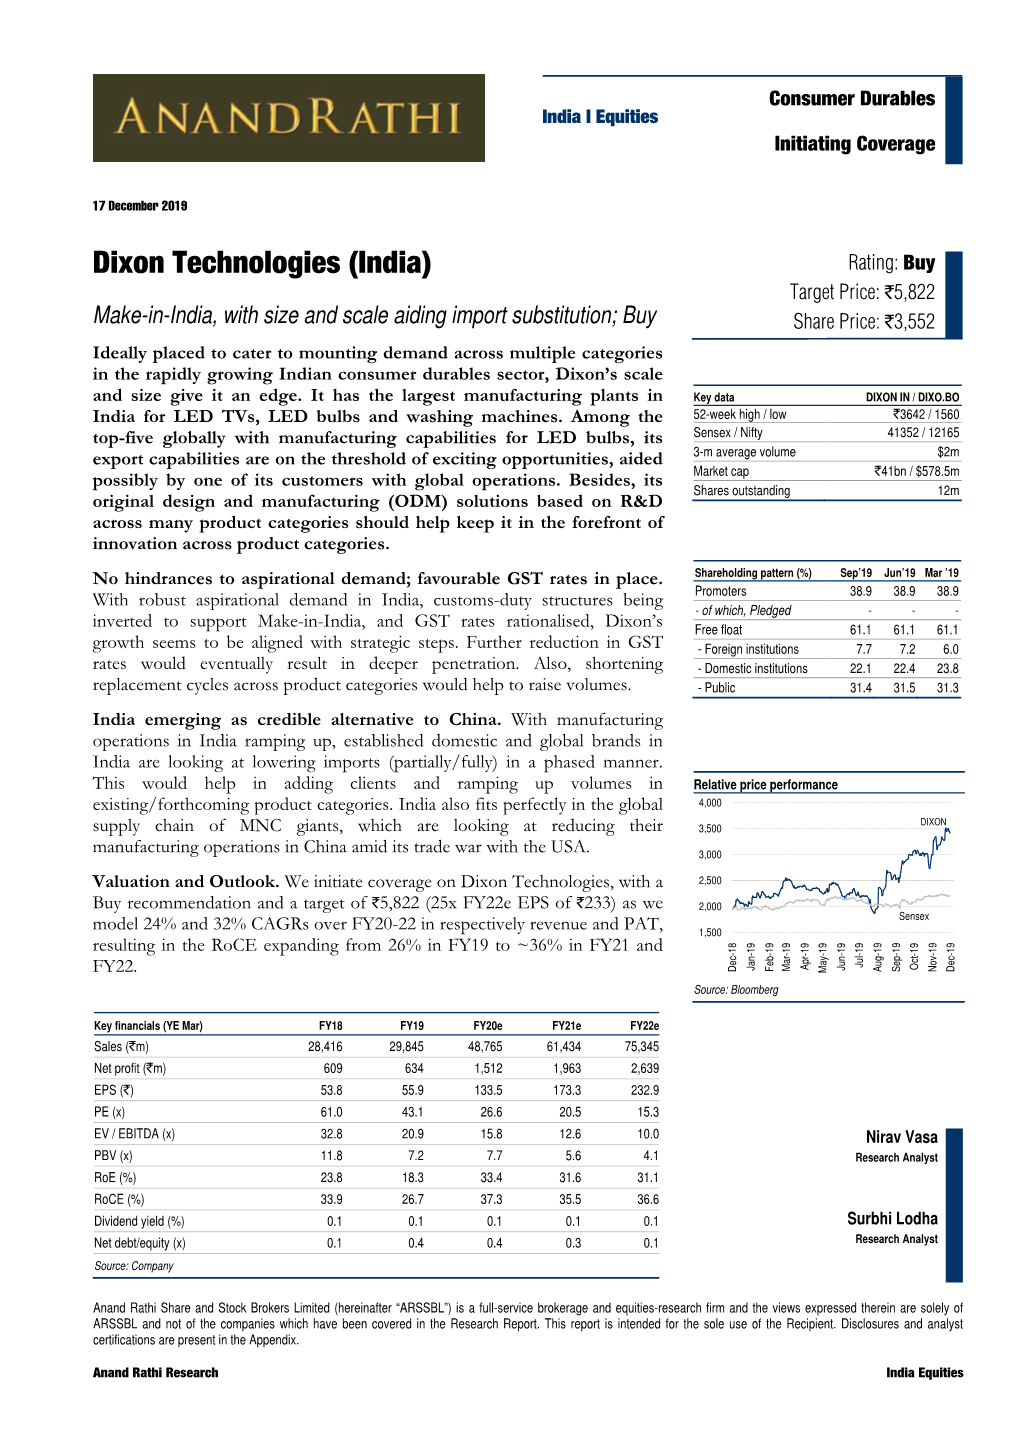 Dixon Technologies (India) Rating: Buy